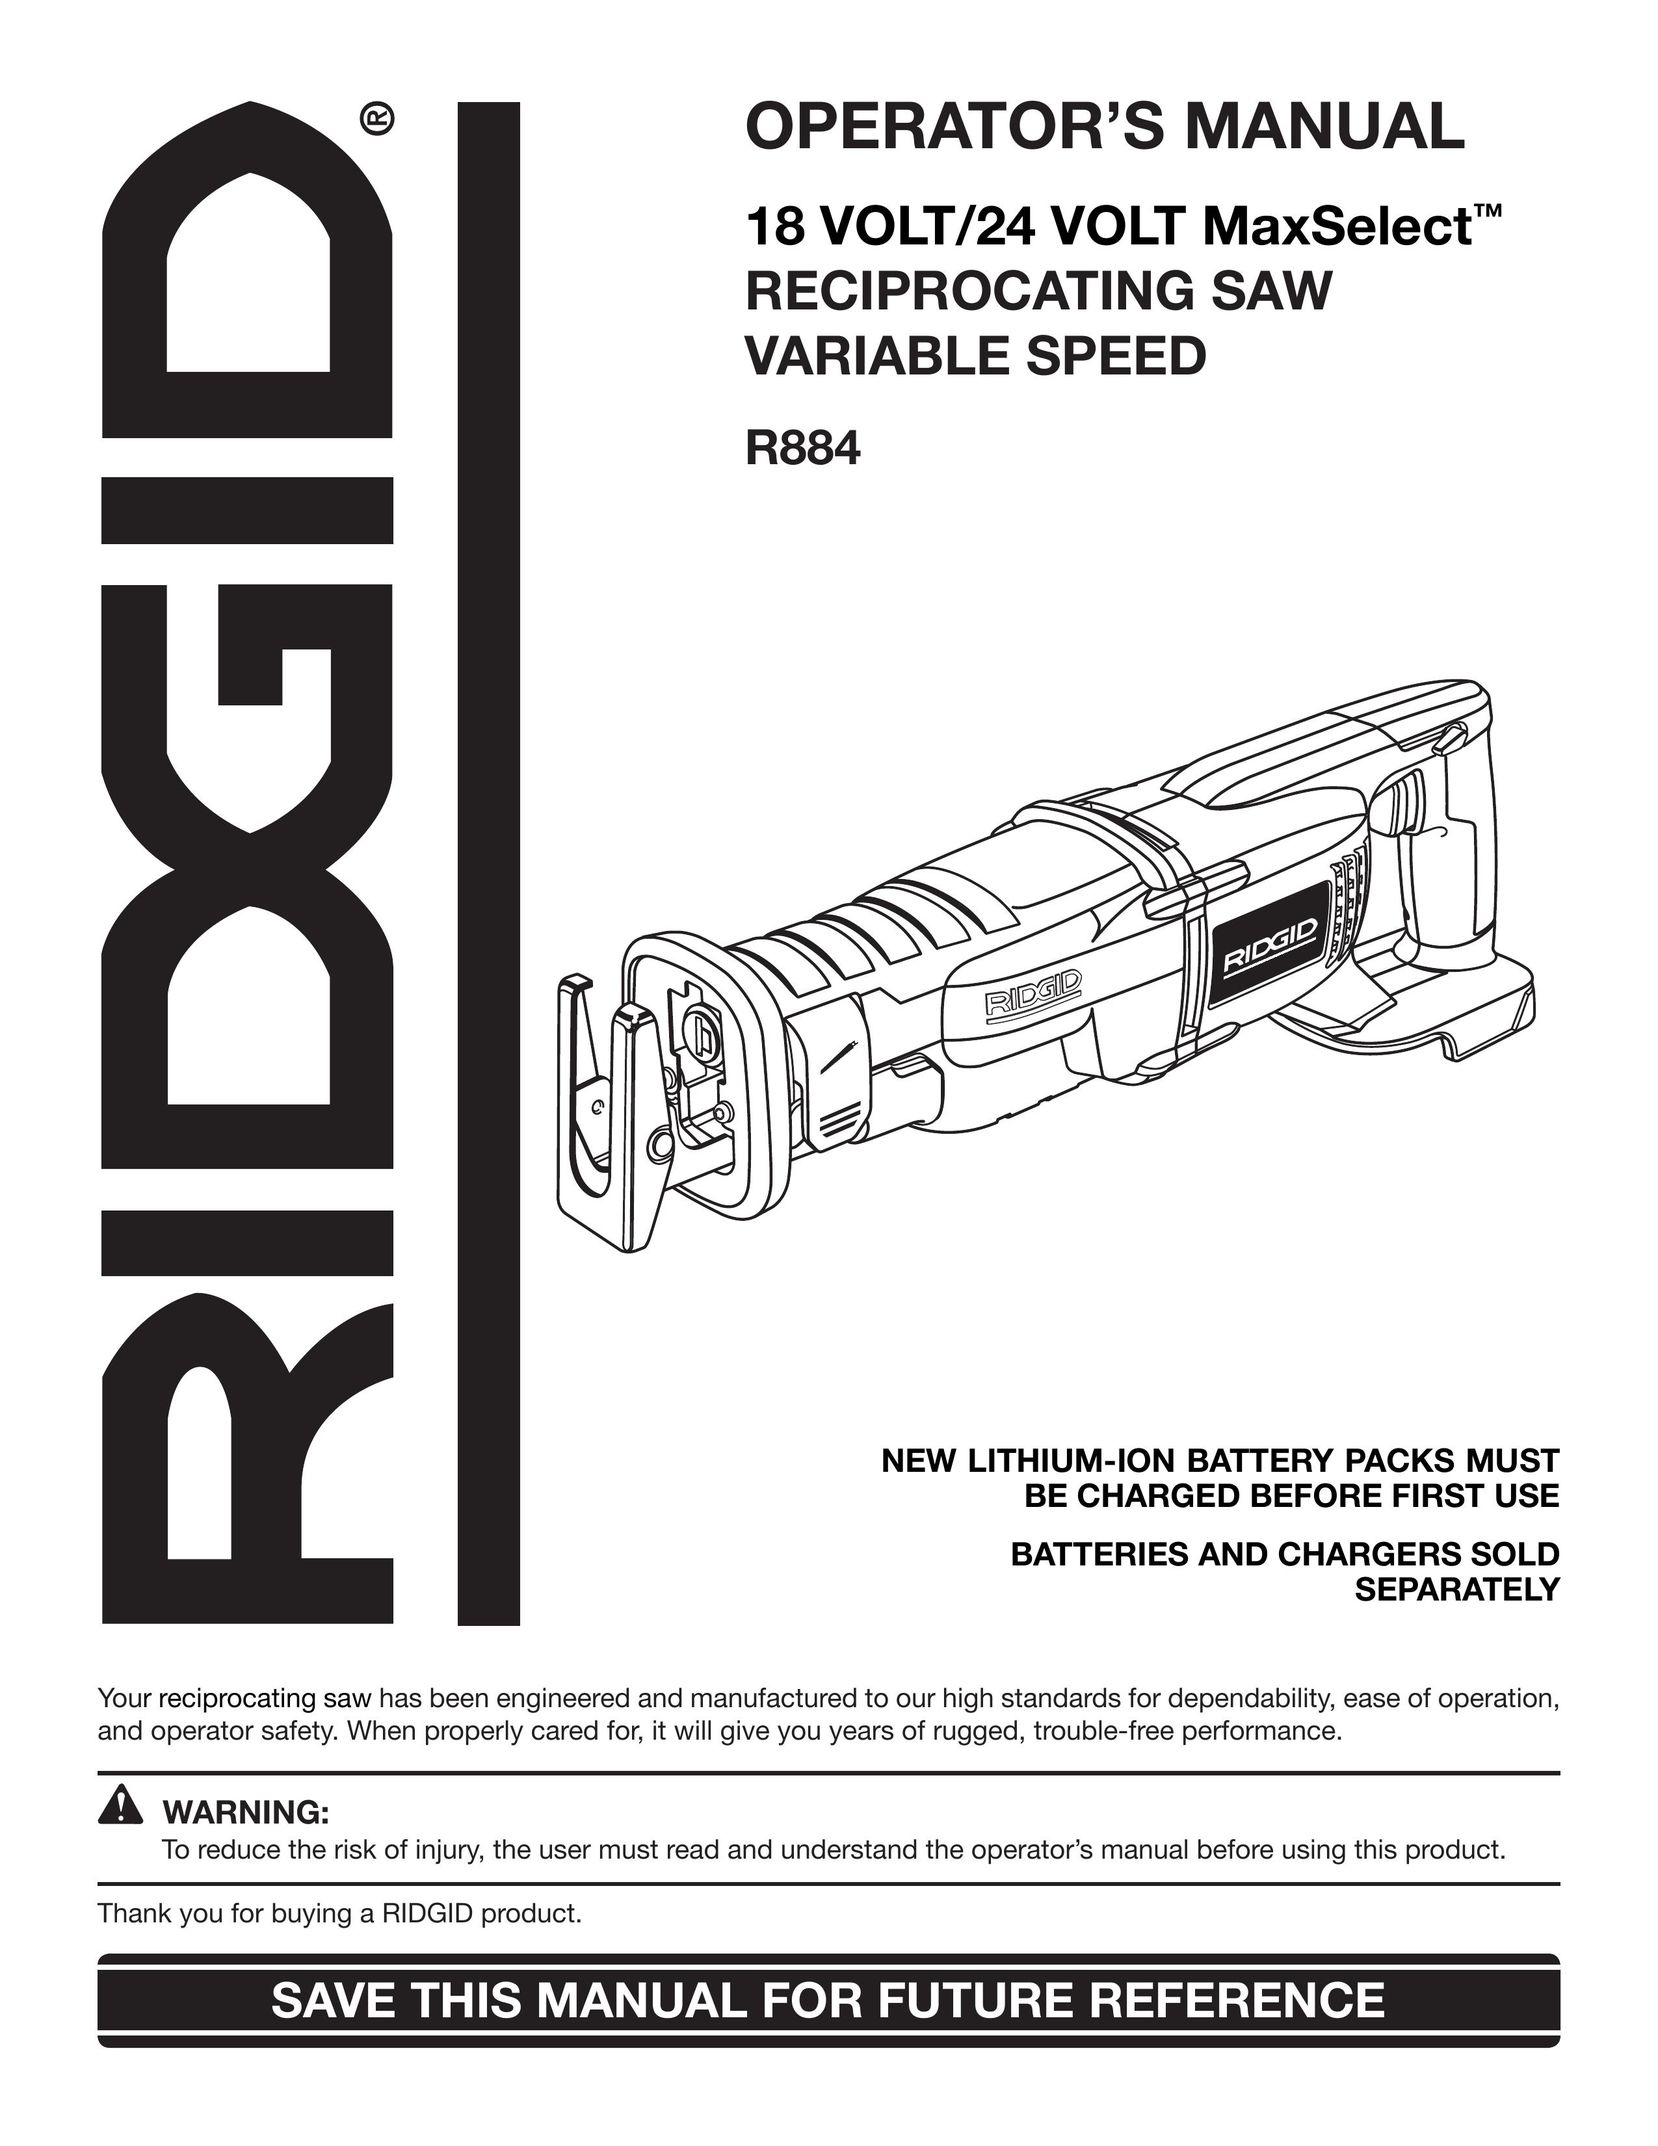 RIDGID R884 Cordless Saw User Manual